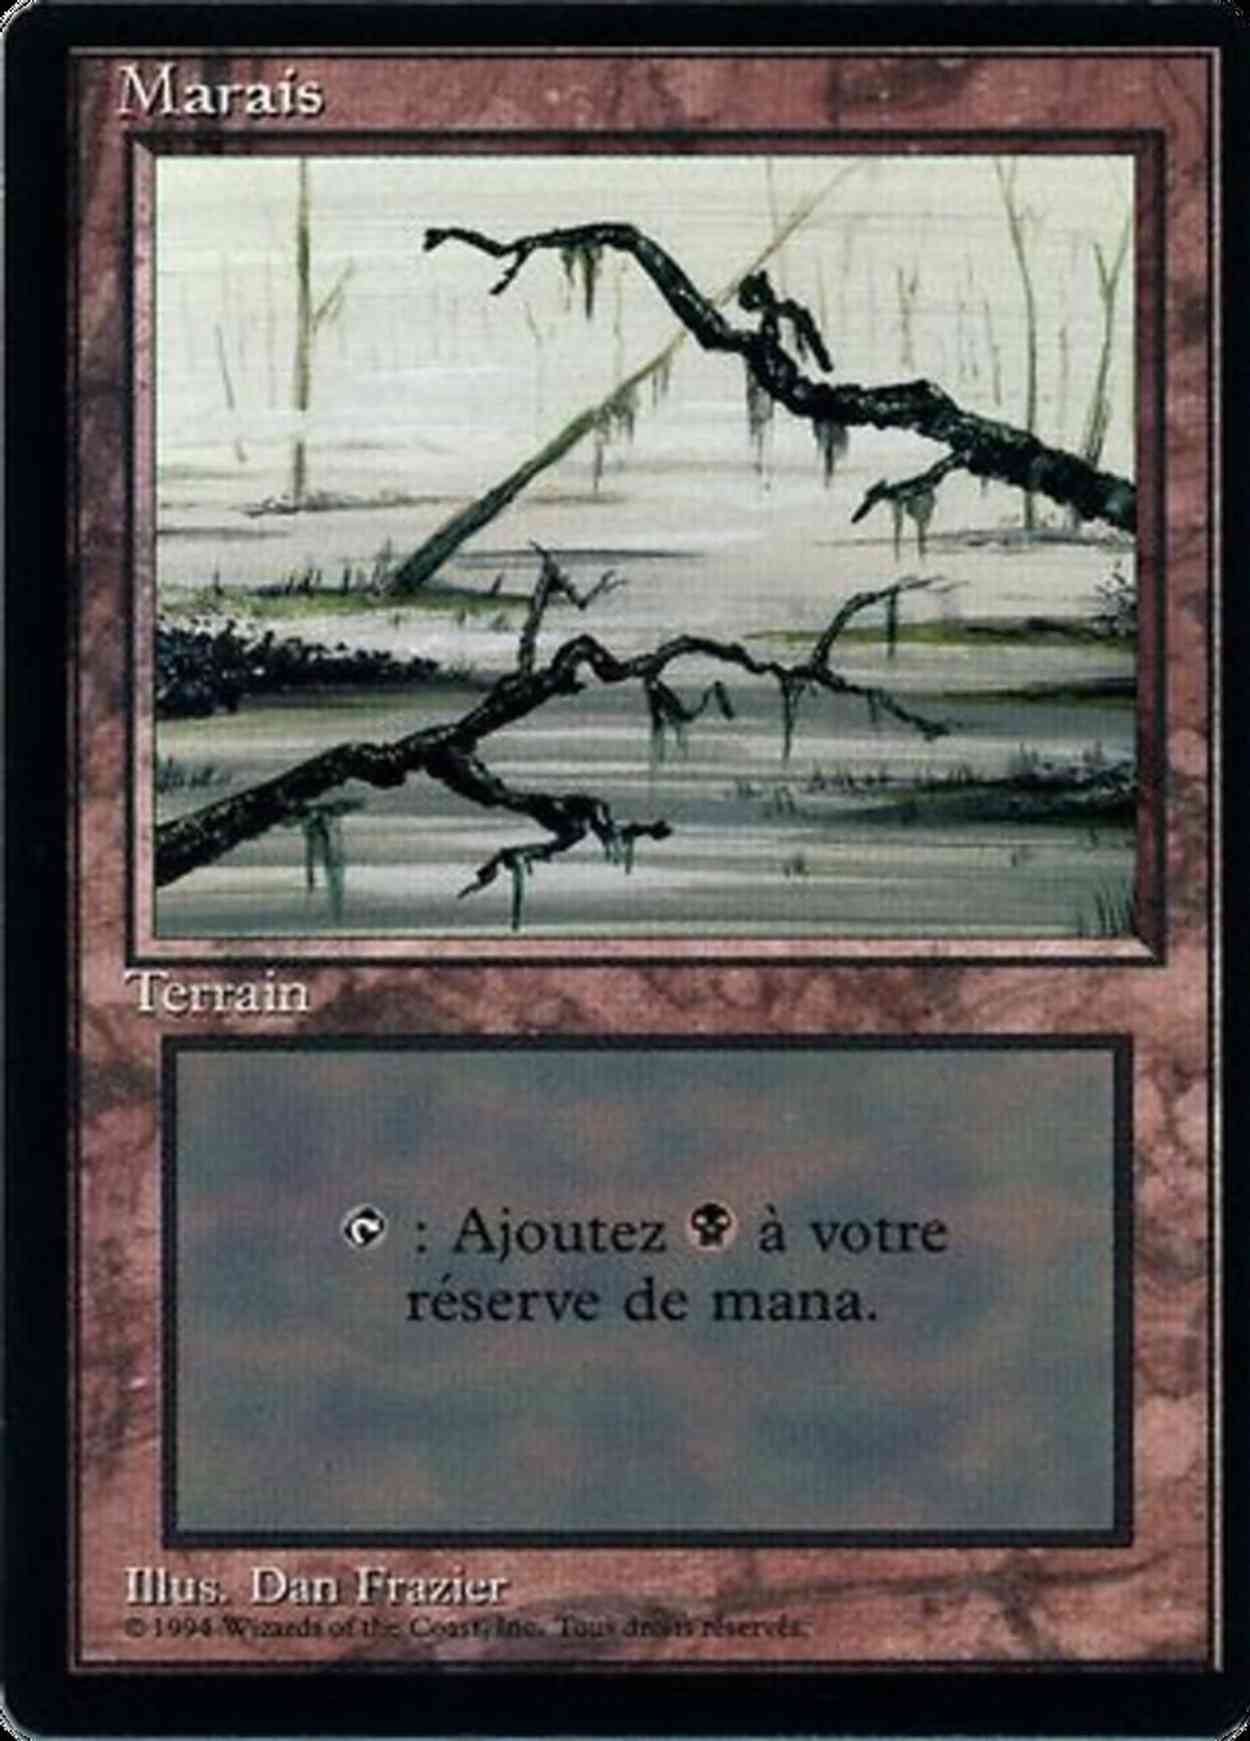 Swamp (C) magic card front